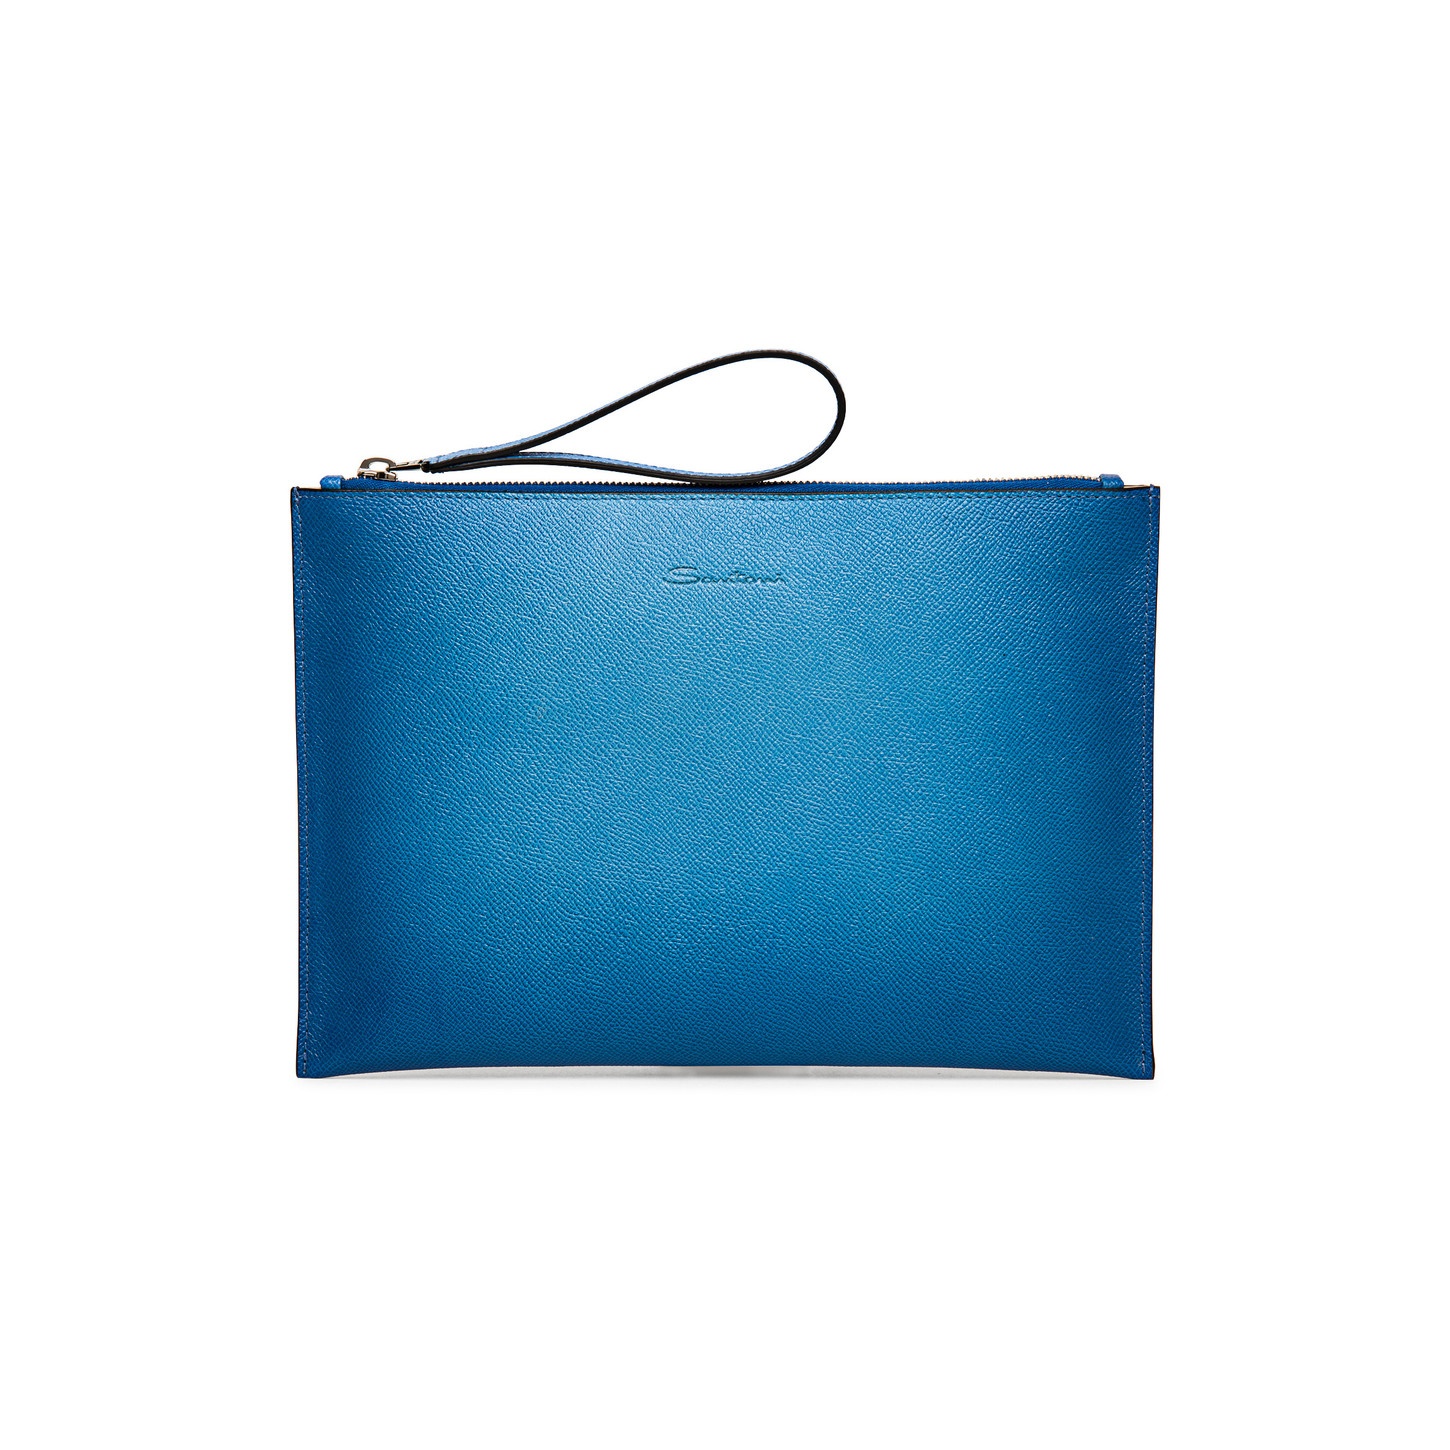 Light blue saffiano leather pouch - 1